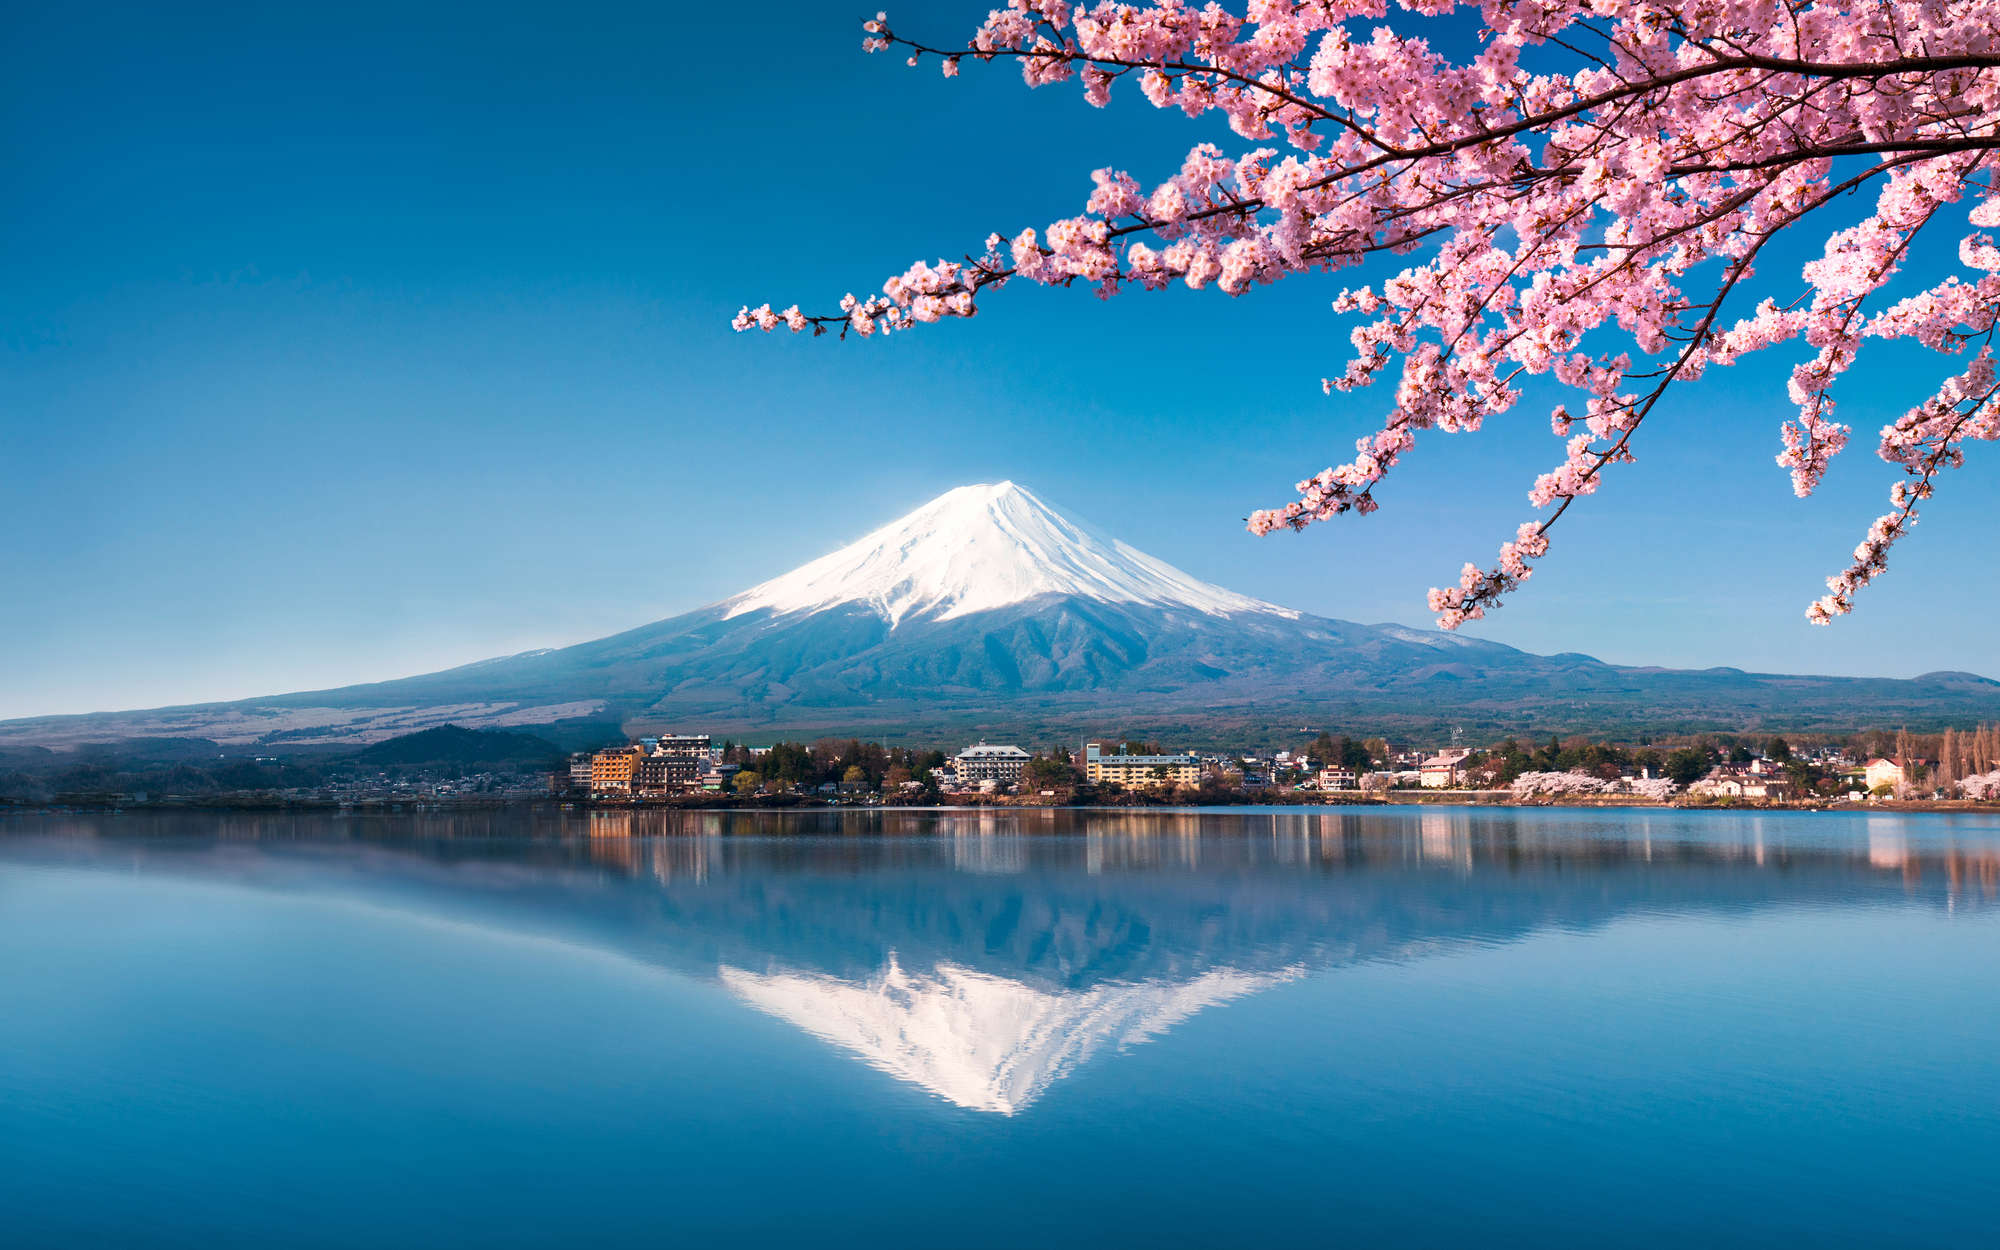             Fotomurali Vulcano Fuji in Giappone - Pile liscio opaco
        